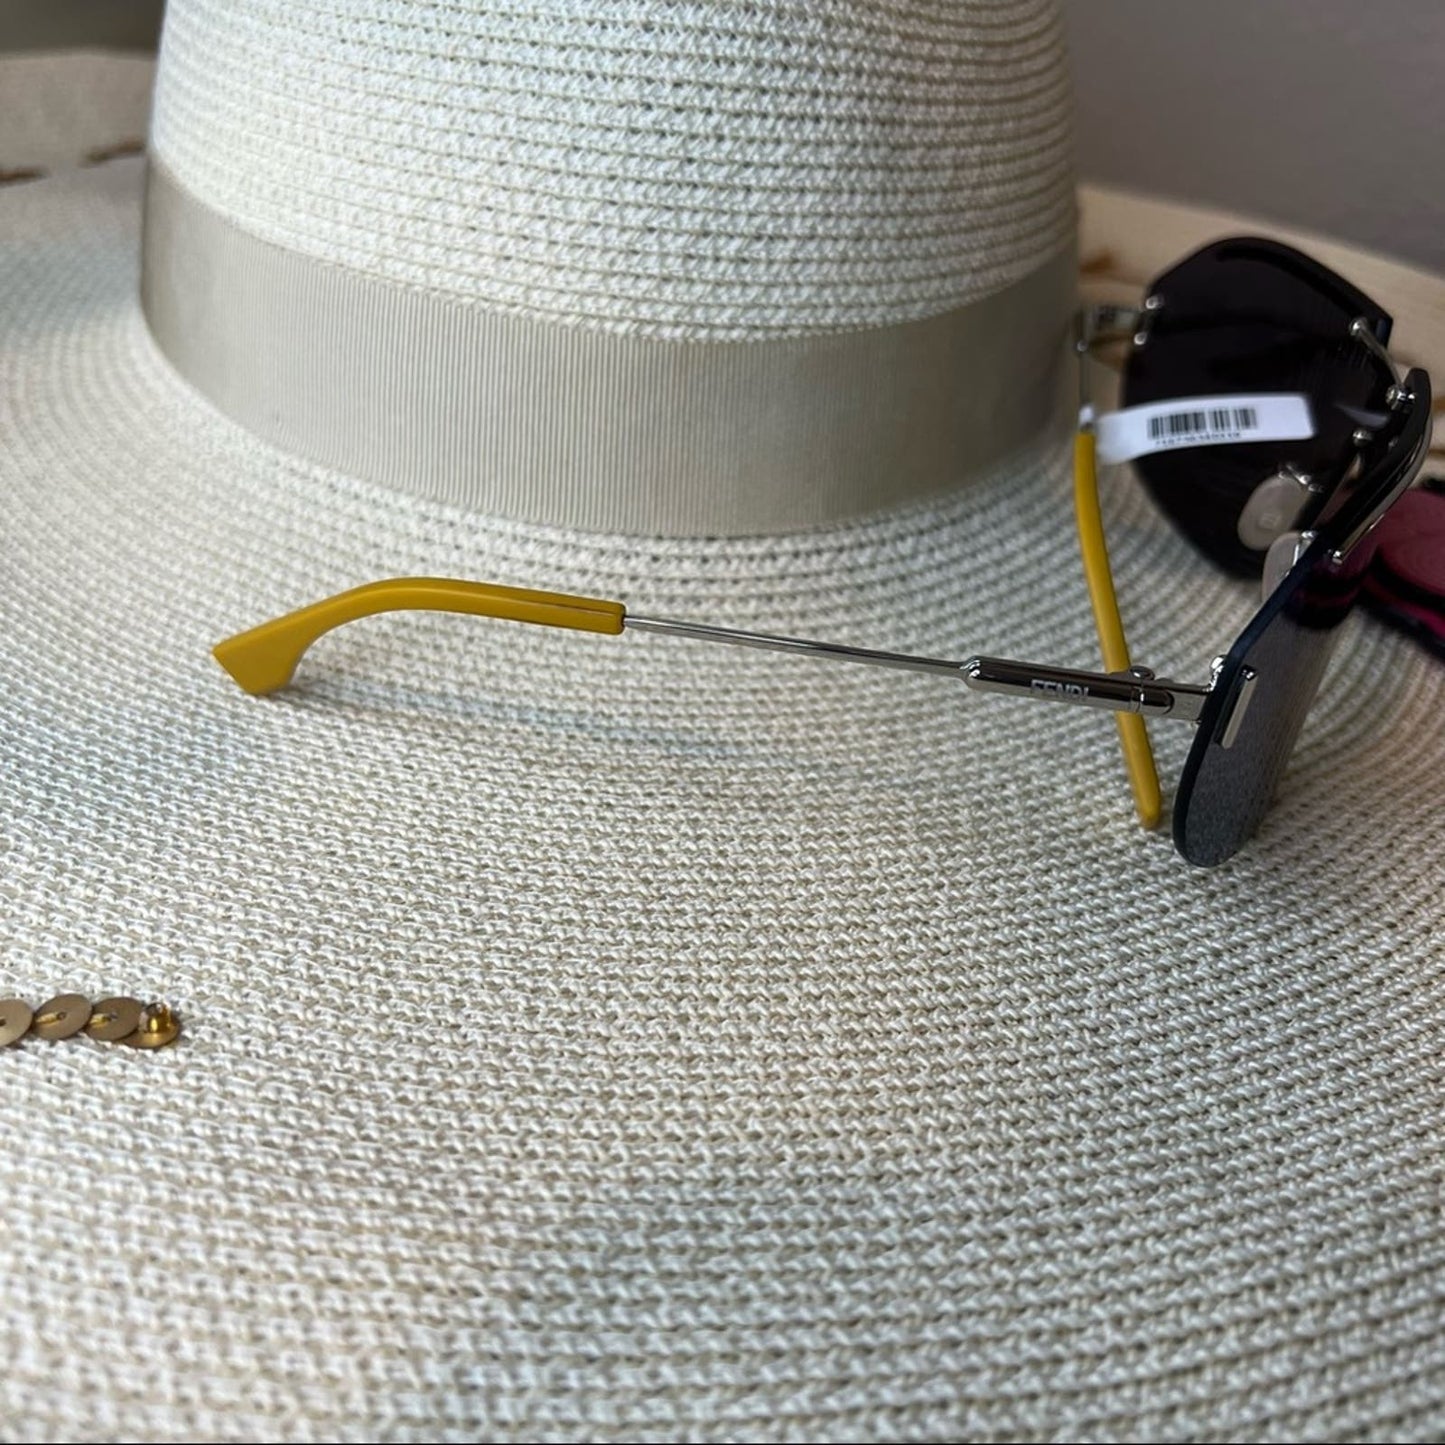 Fendi Large Gray Signature Shield Sunglasses w/ Yellow Details, “FFM0098/S”